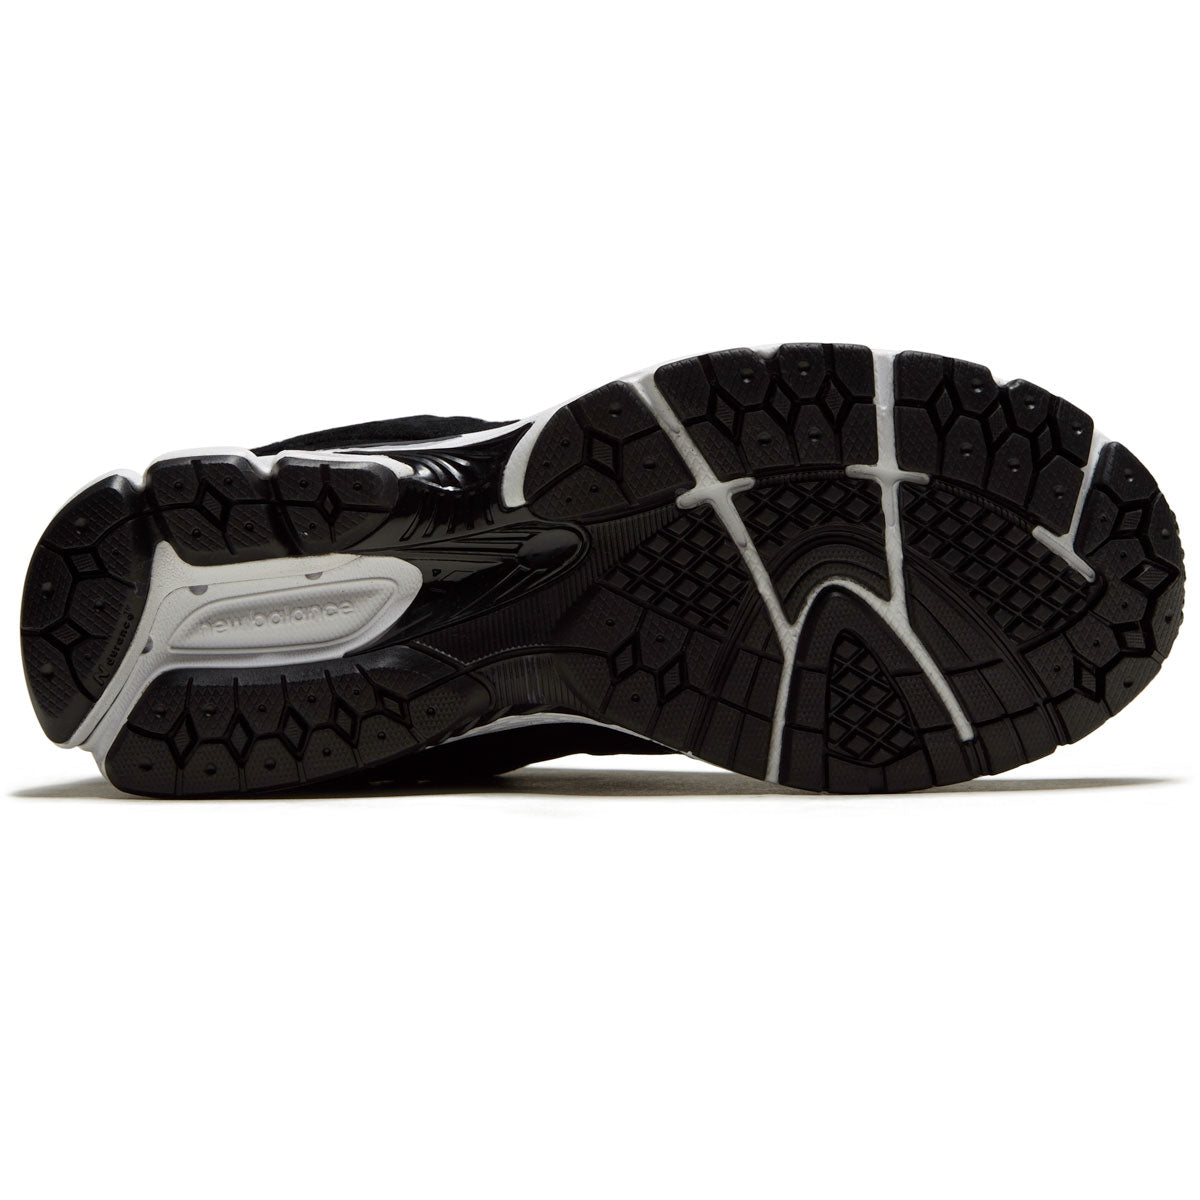 New Balance 2002R Shoes - Black/Phantom/ Gunmetal/White image 4